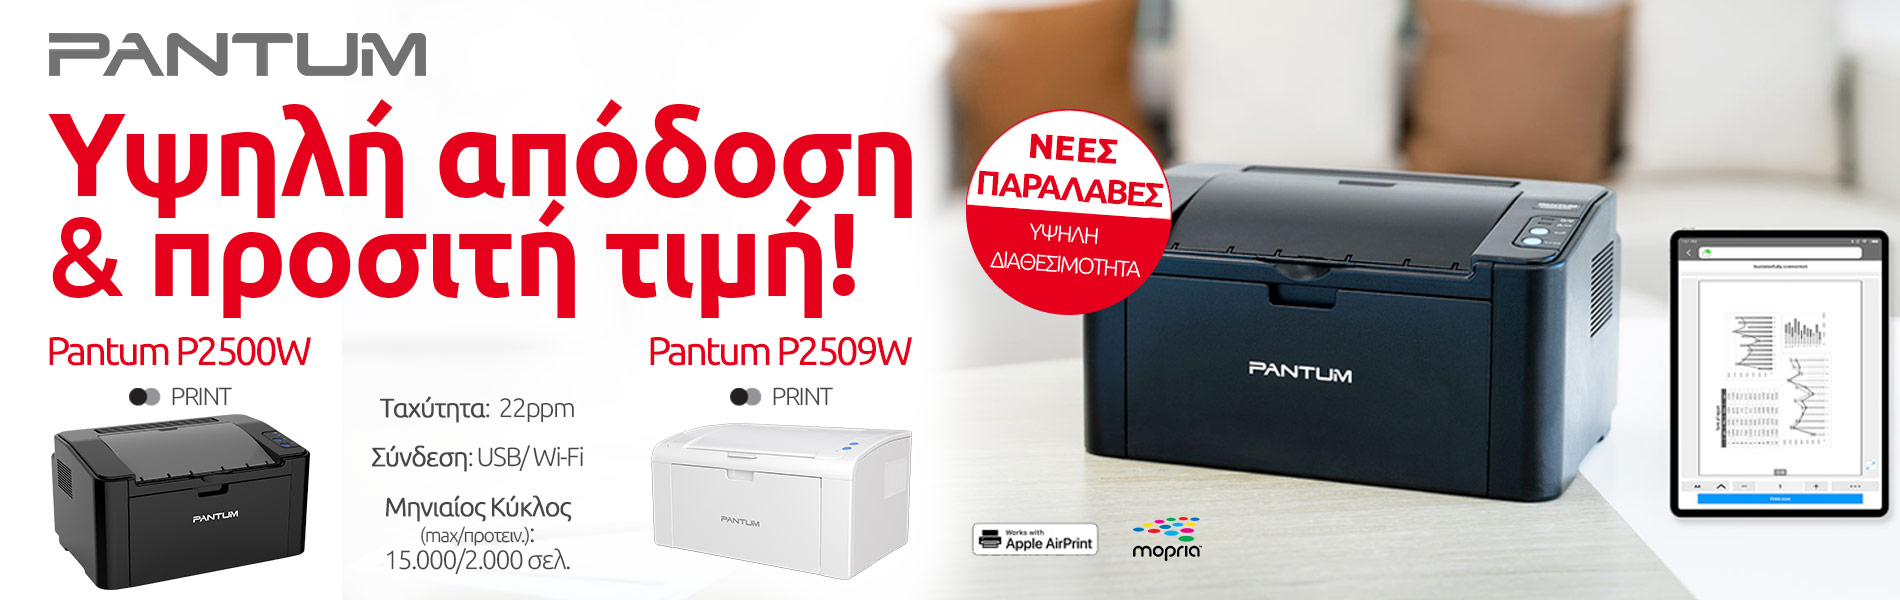 Pantum entry level Printers – Νέες Παραλαβές!